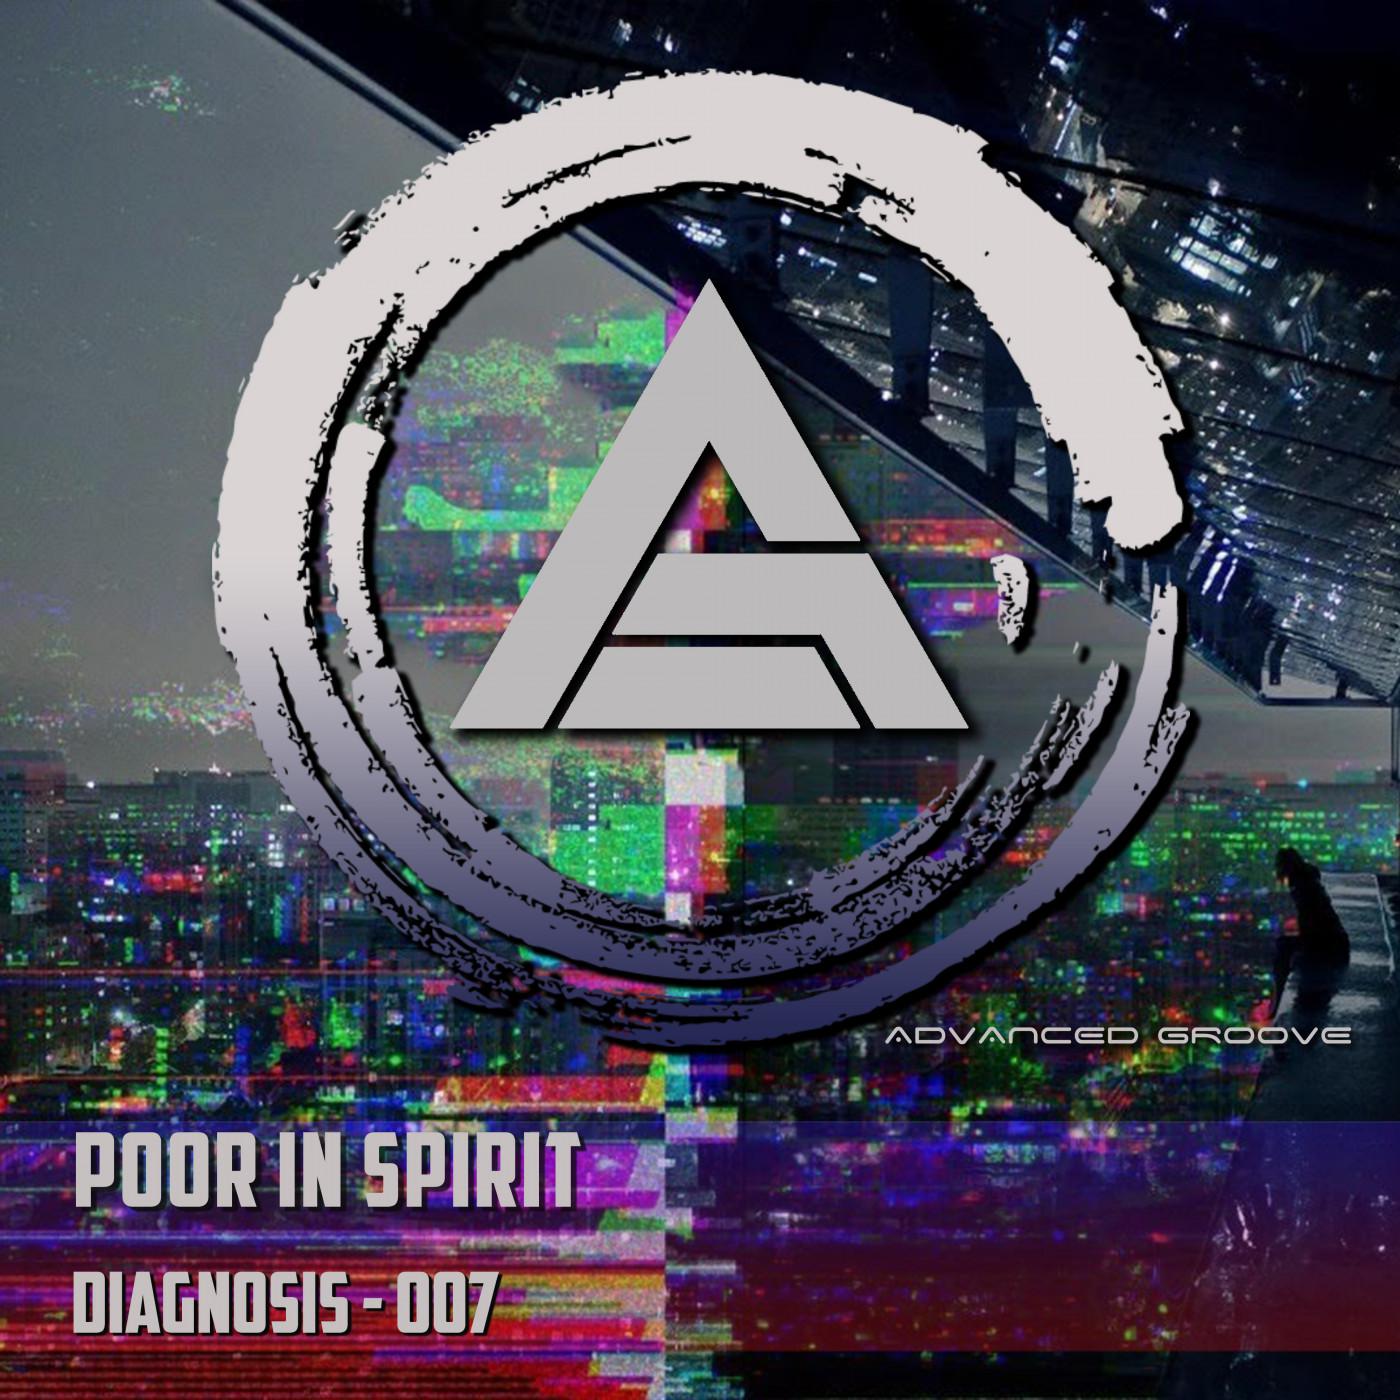 Poor In Spirit - Wheel of fortune (Original Mix)